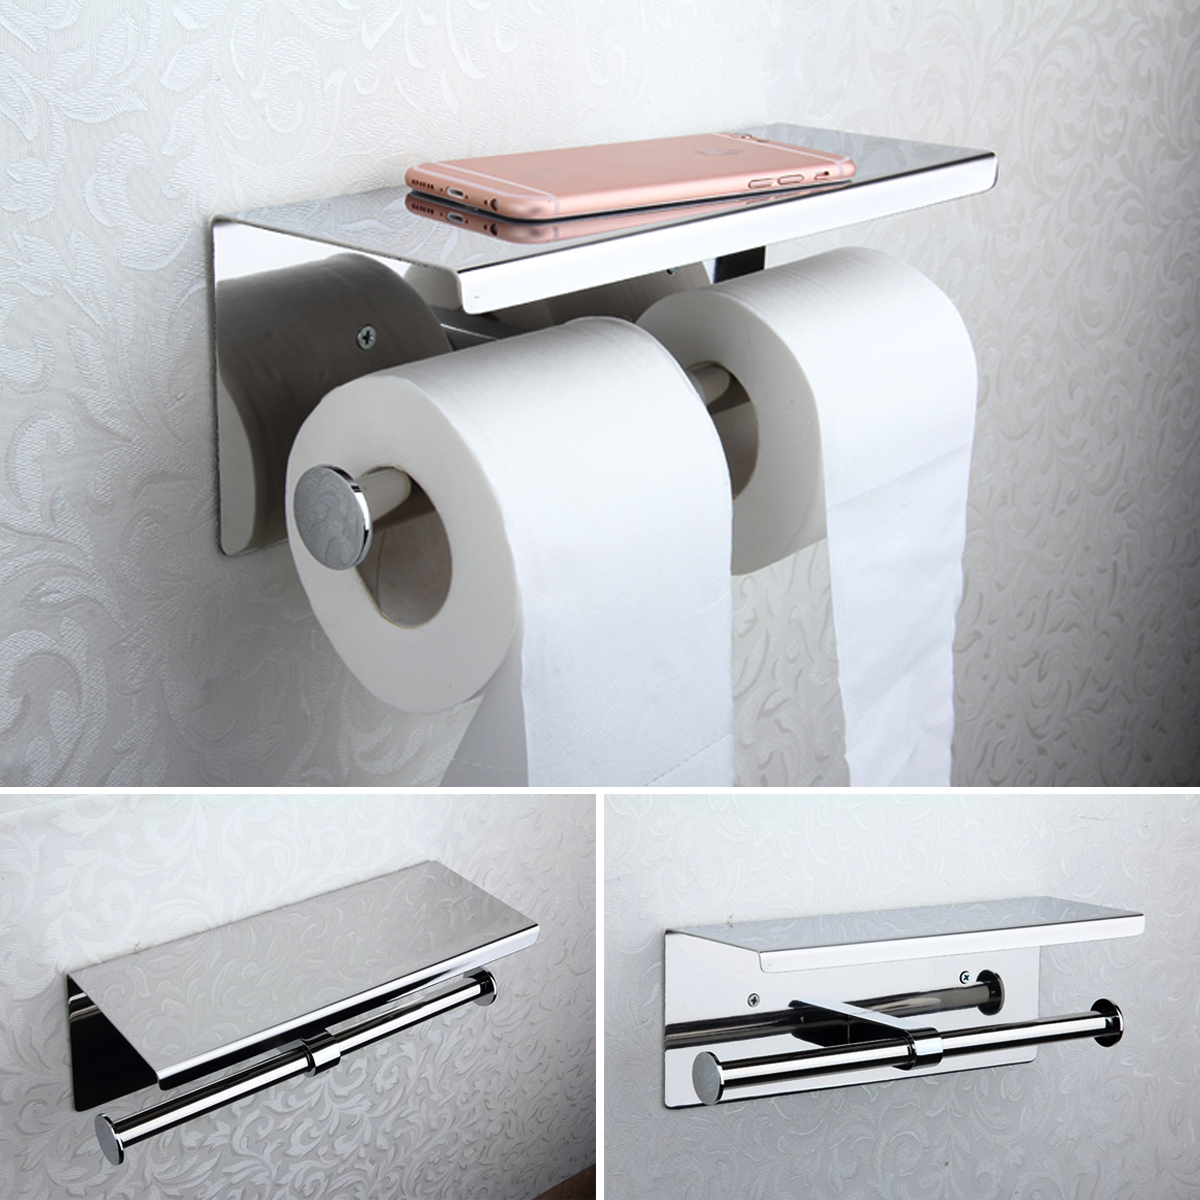 Stainless-Steel-Toilet-Paper-Double-Roll-Holder-Bathroom-Wall-Mount-Paper-Shelf-Holder-Home-1523904-1